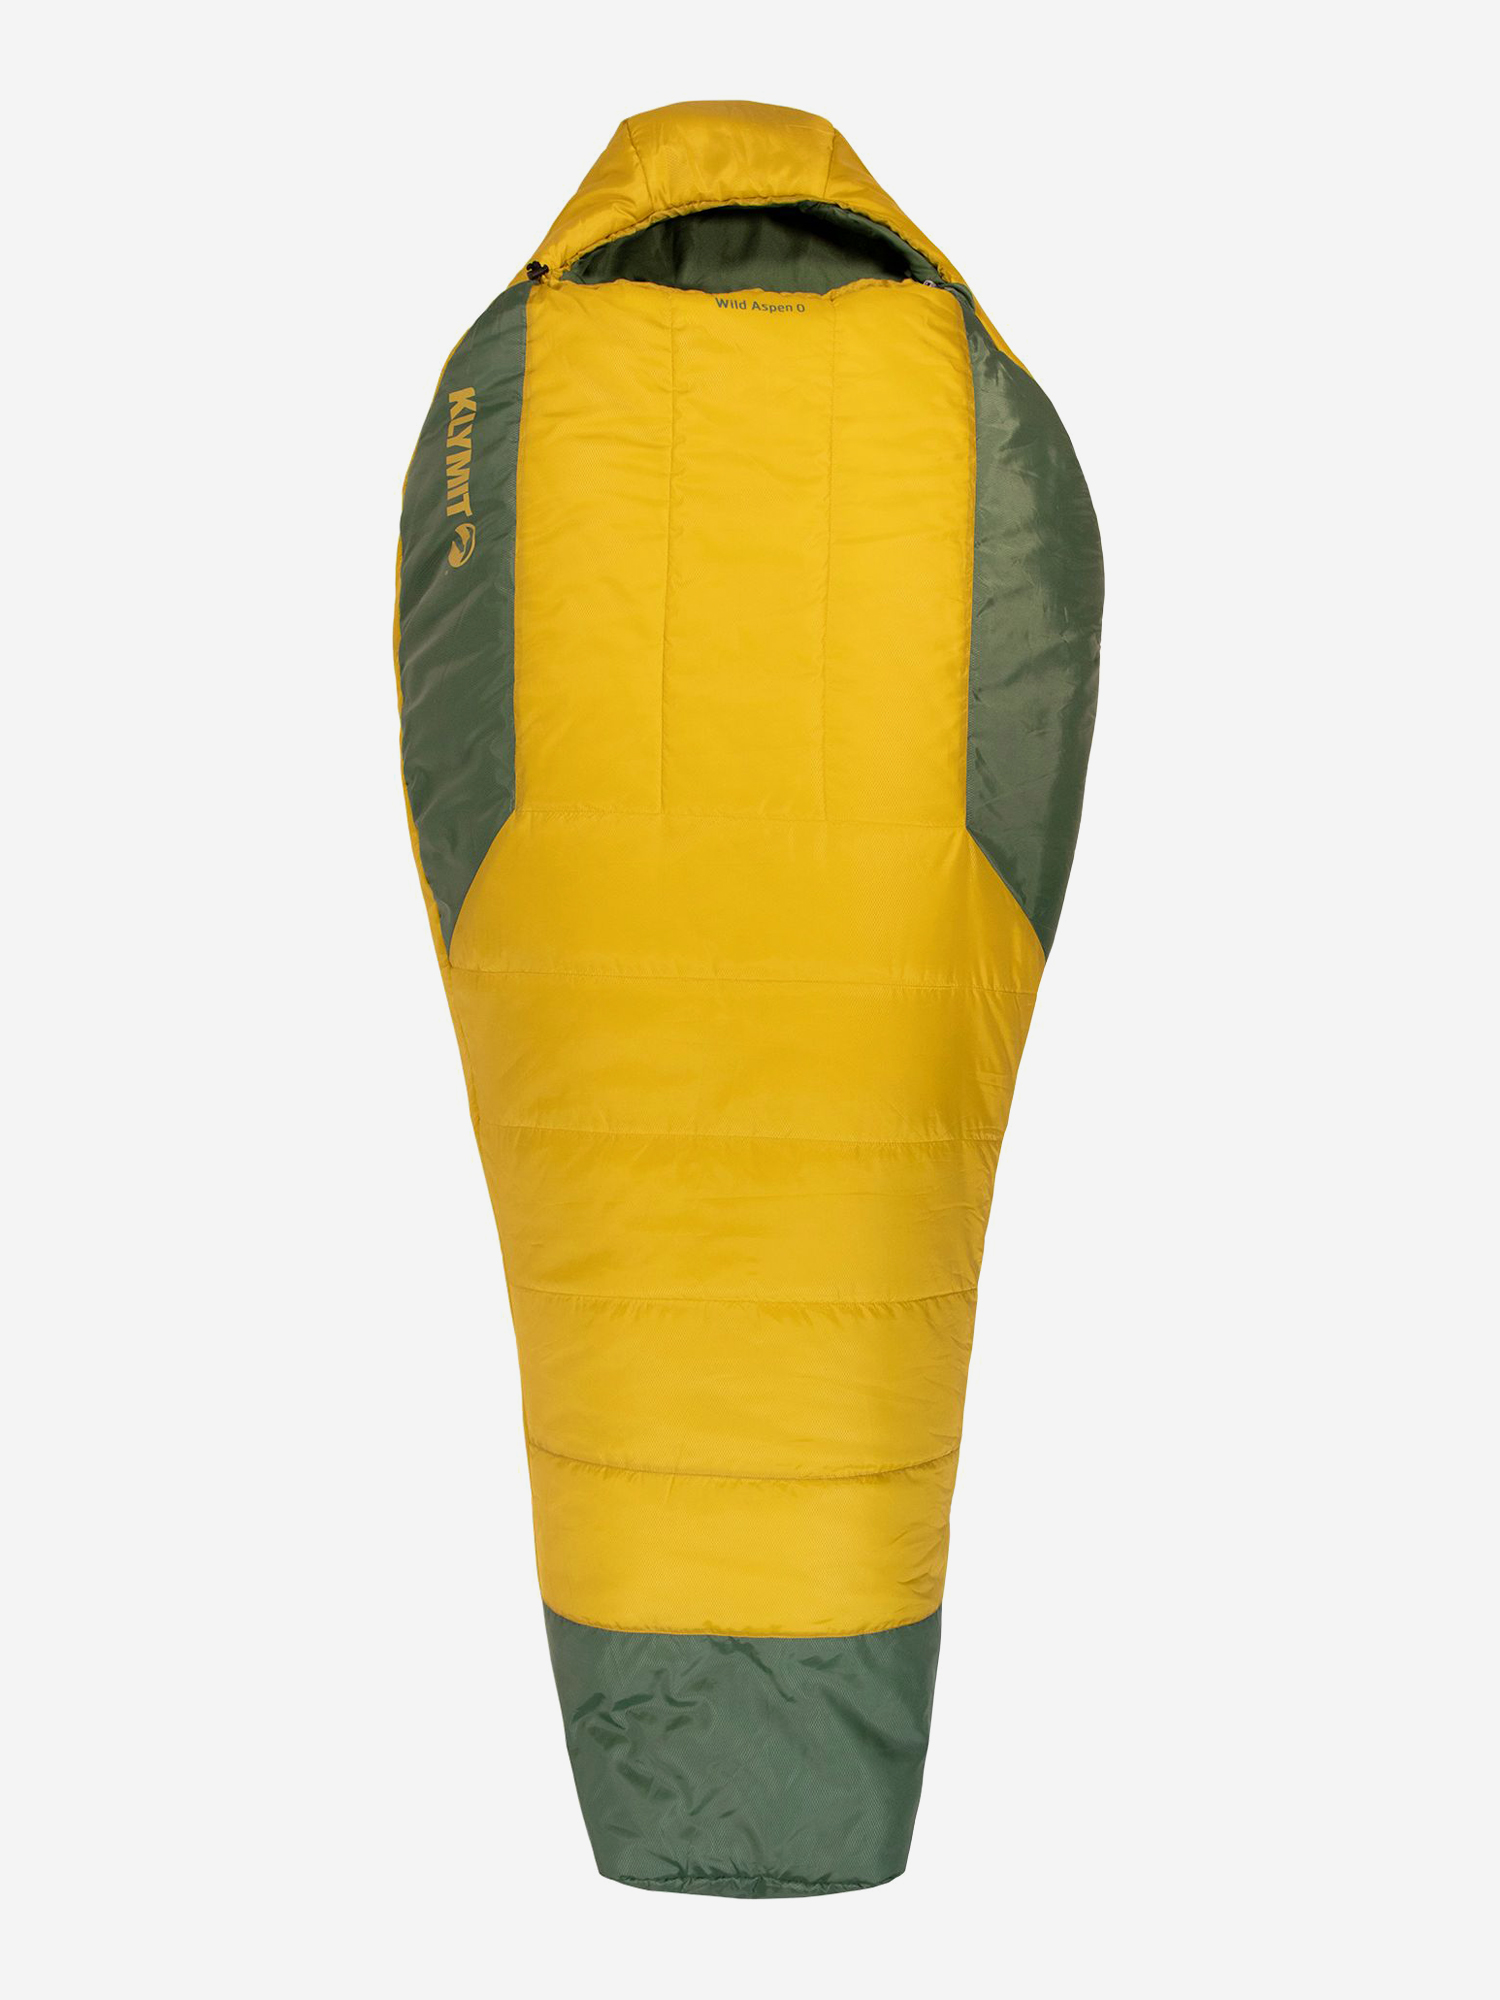 Спальный мешок KLYMIT Wild Aspen 0 Extra Large (13WAYL00E) желто-зеленый, Желтый мешок для обуви на шнурке желтый оранжевый